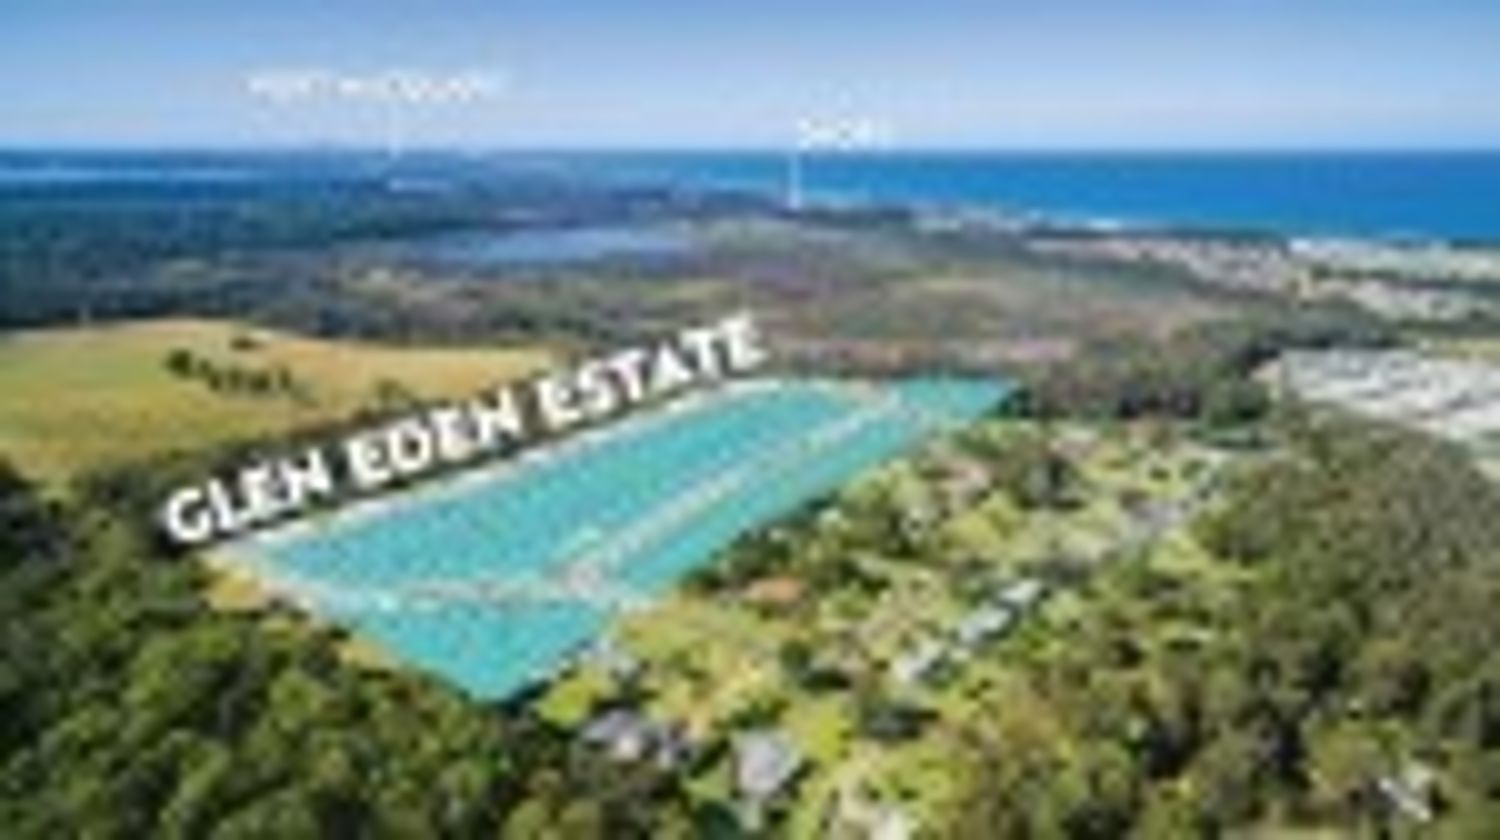 Lot 7 Glen Eden Estate, Lake Cathie NSW 2445, Image 0